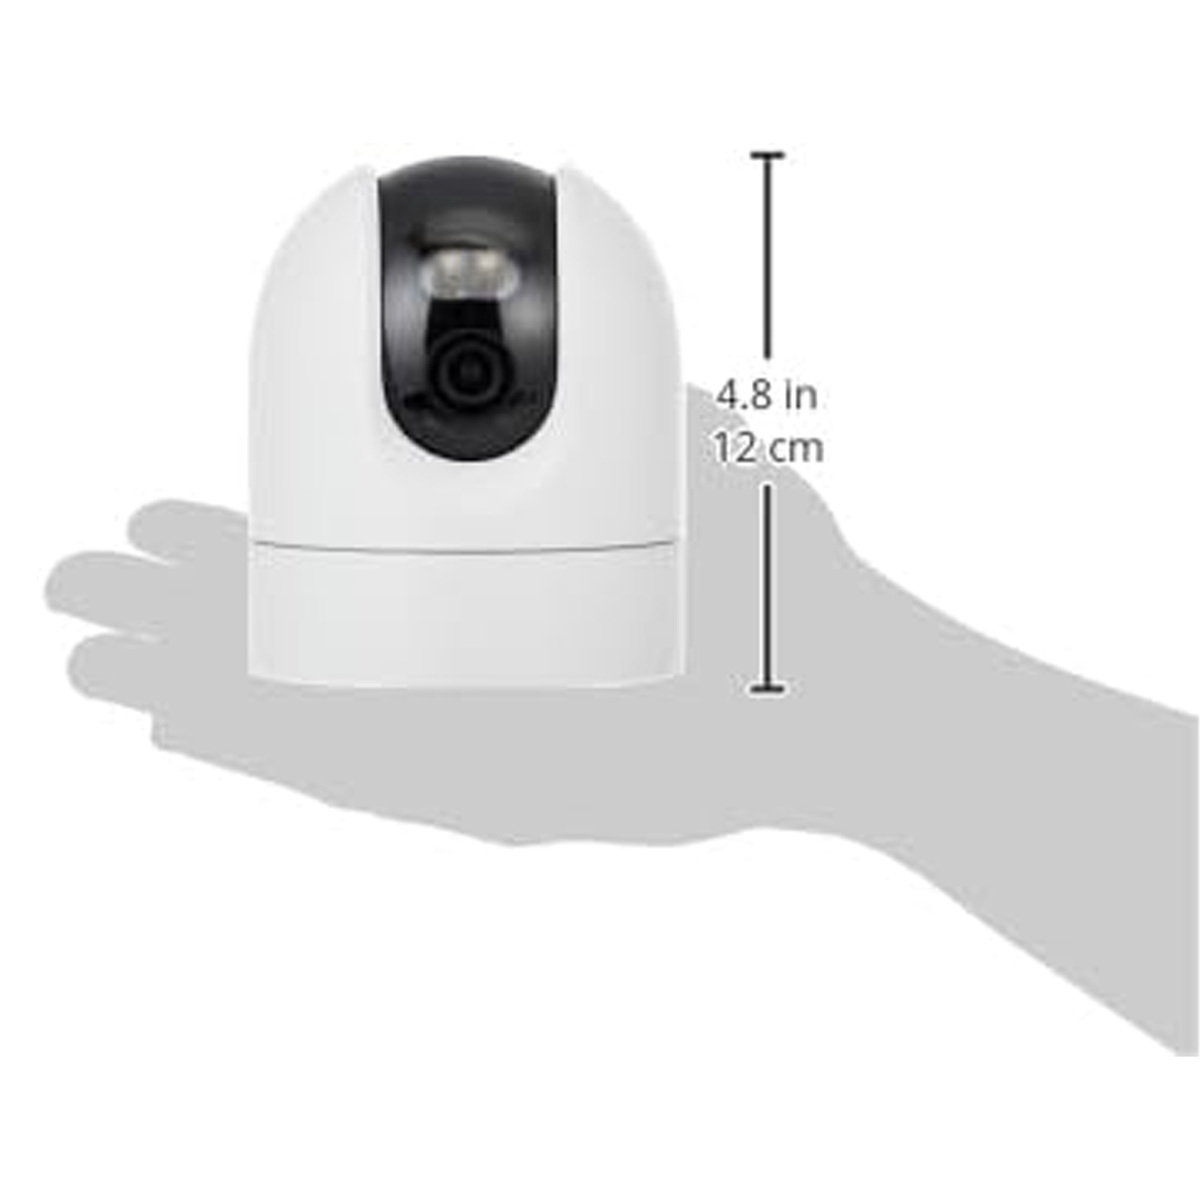 MI 2.5K Outdoor Camera CW400, White, MJSXJ04HL